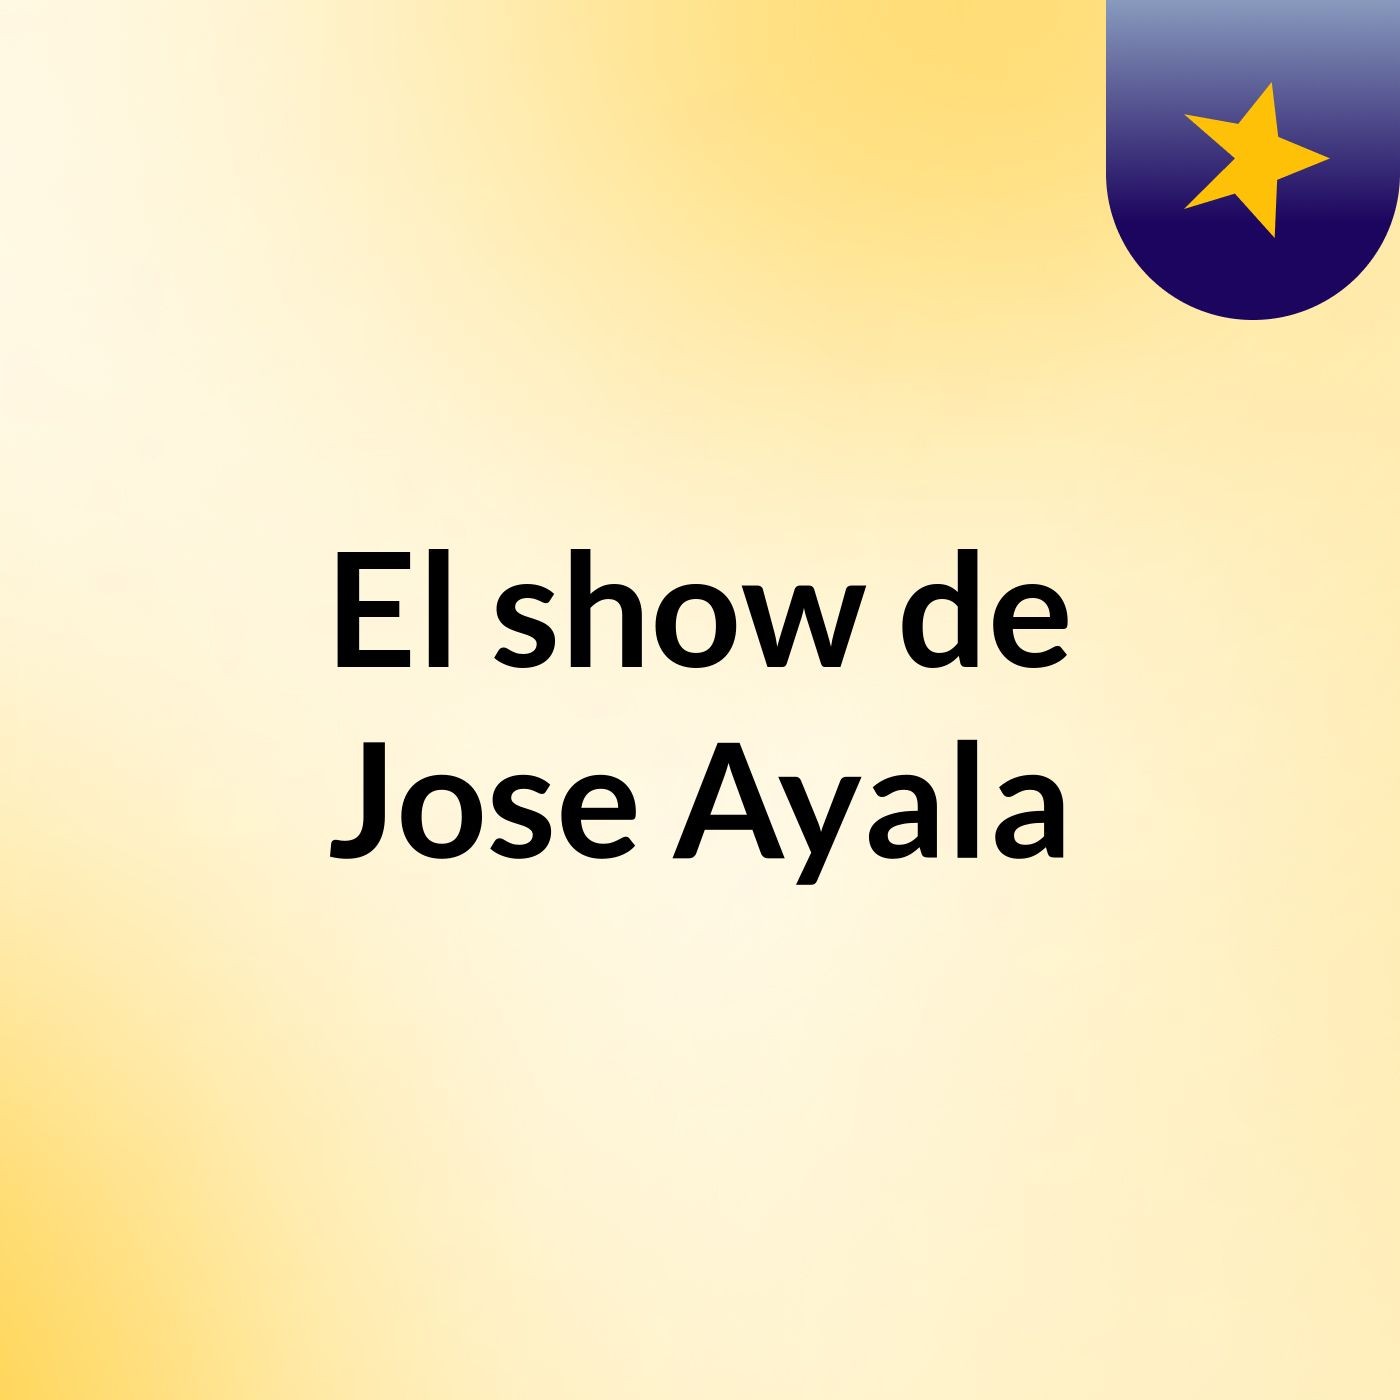 El show de Jose Ayala